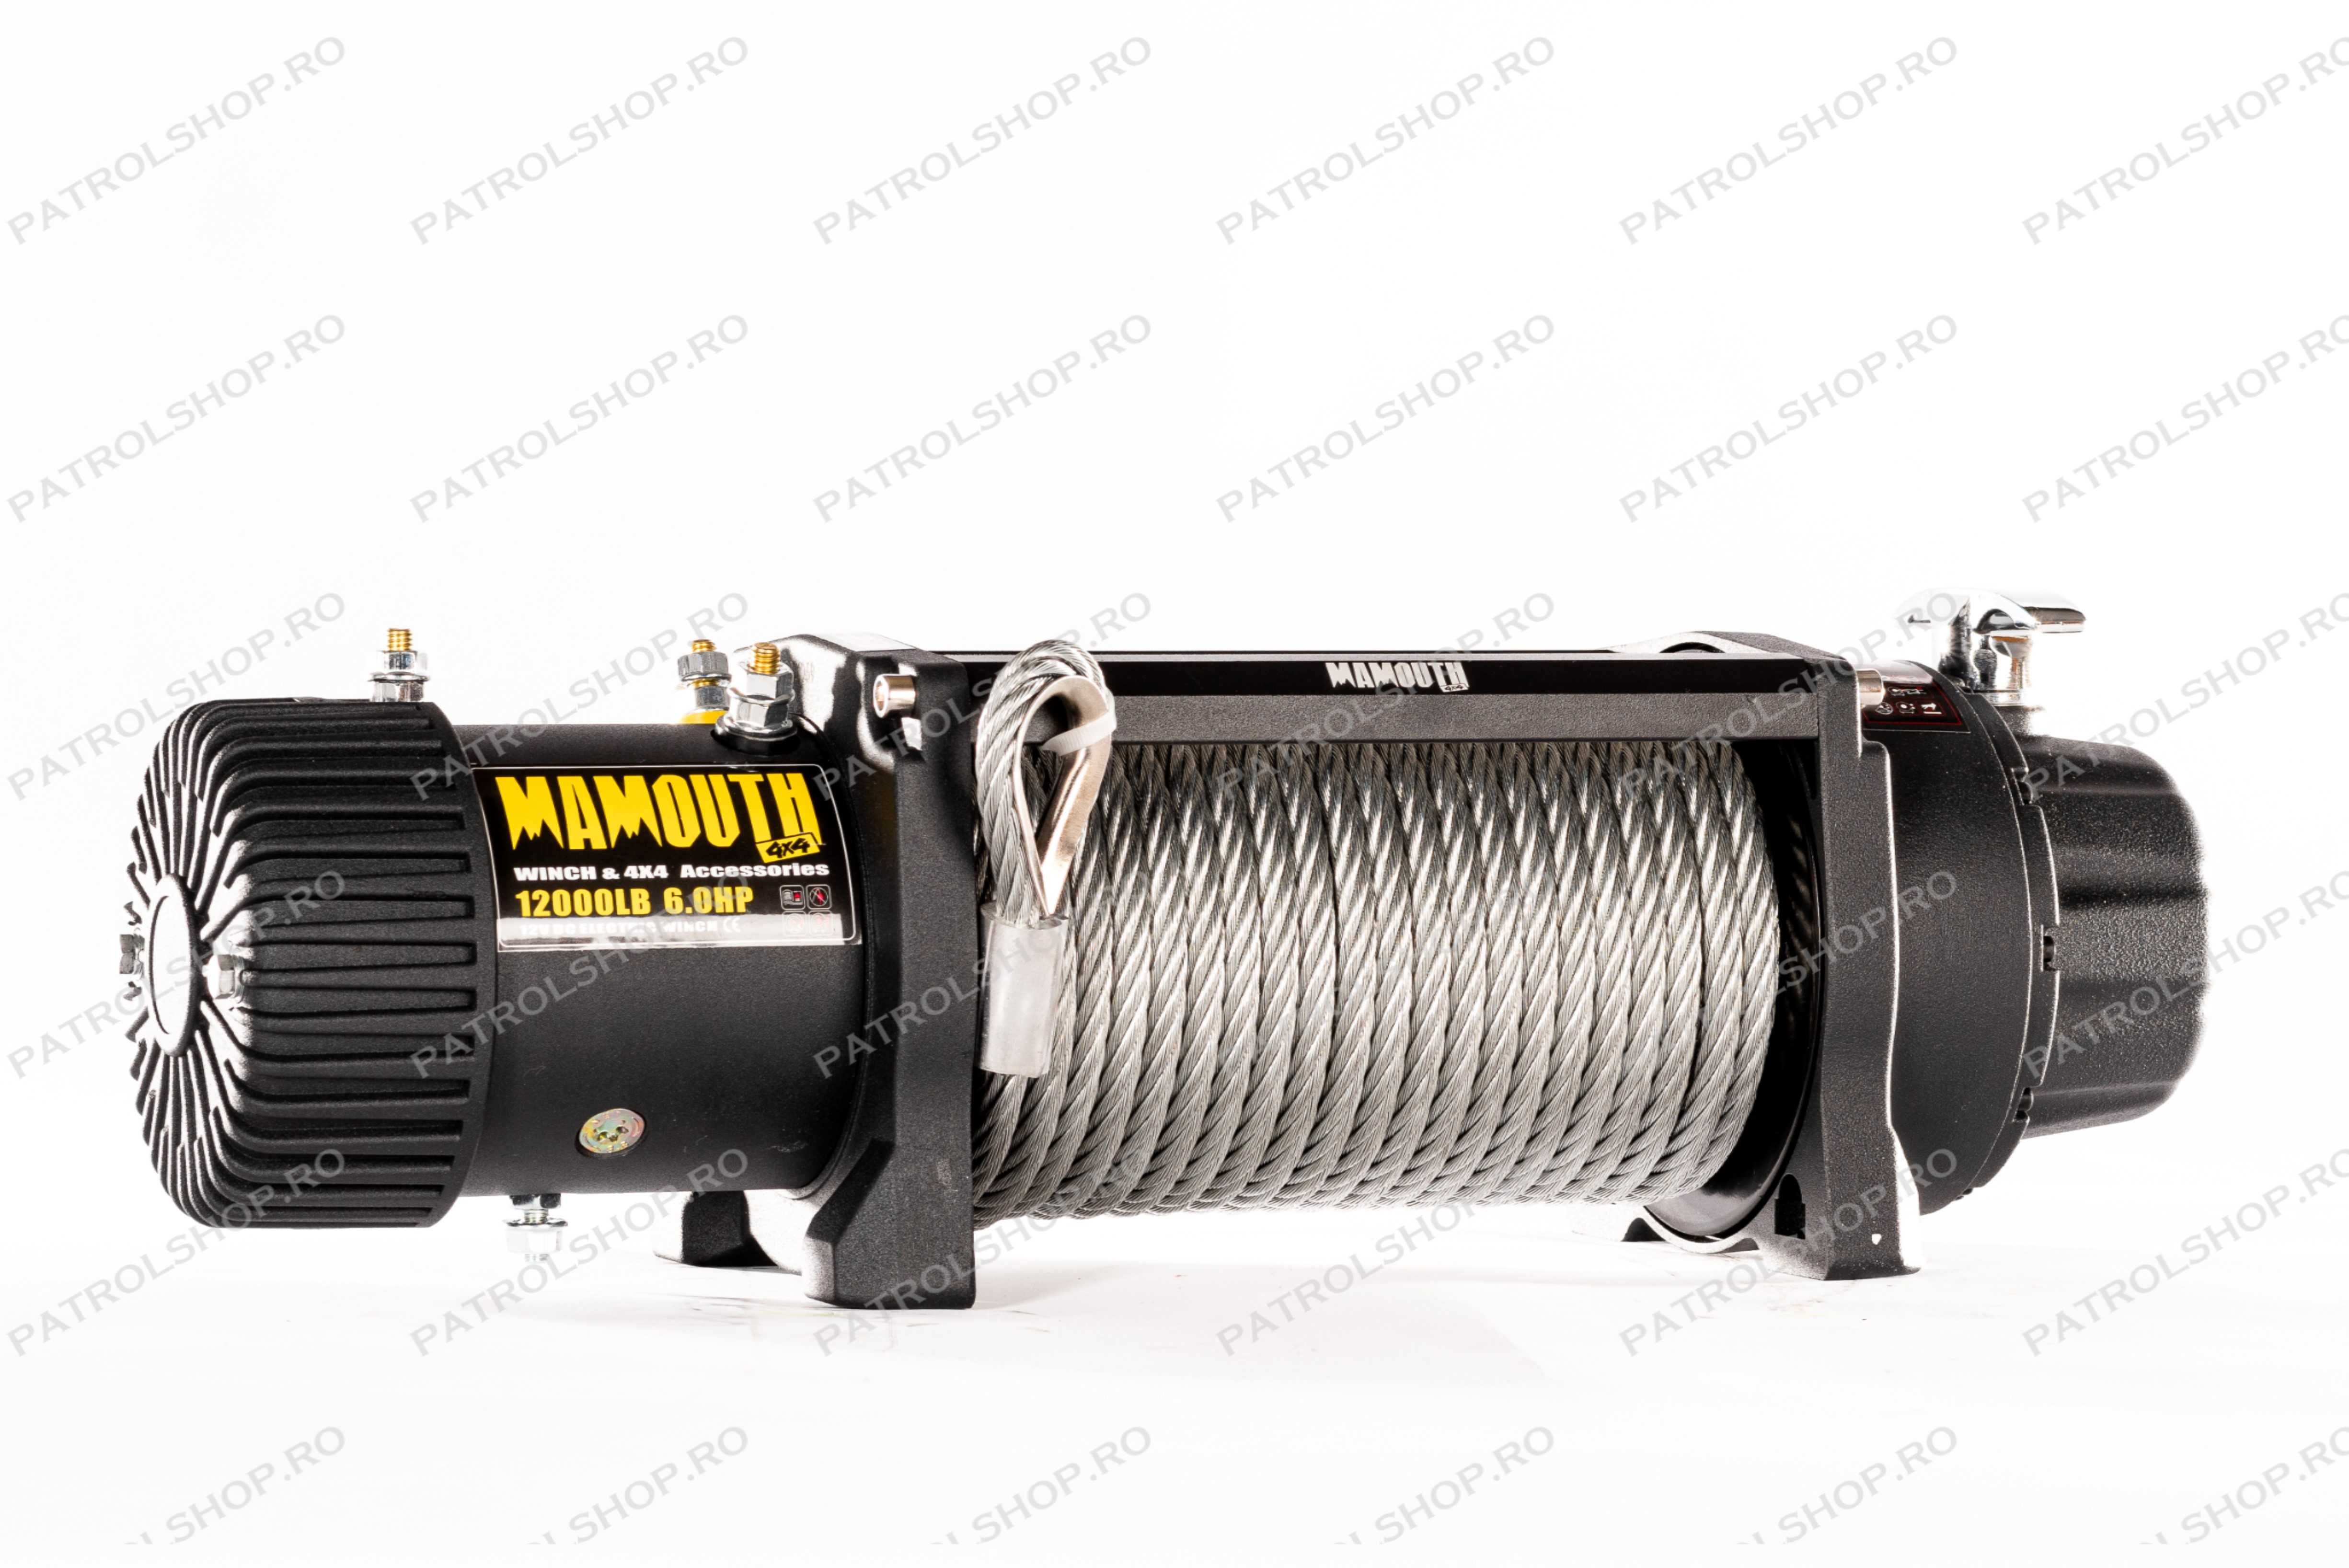 Troliu auto electric Mamouth 12000 lbs - 5443 kg - cablu otel